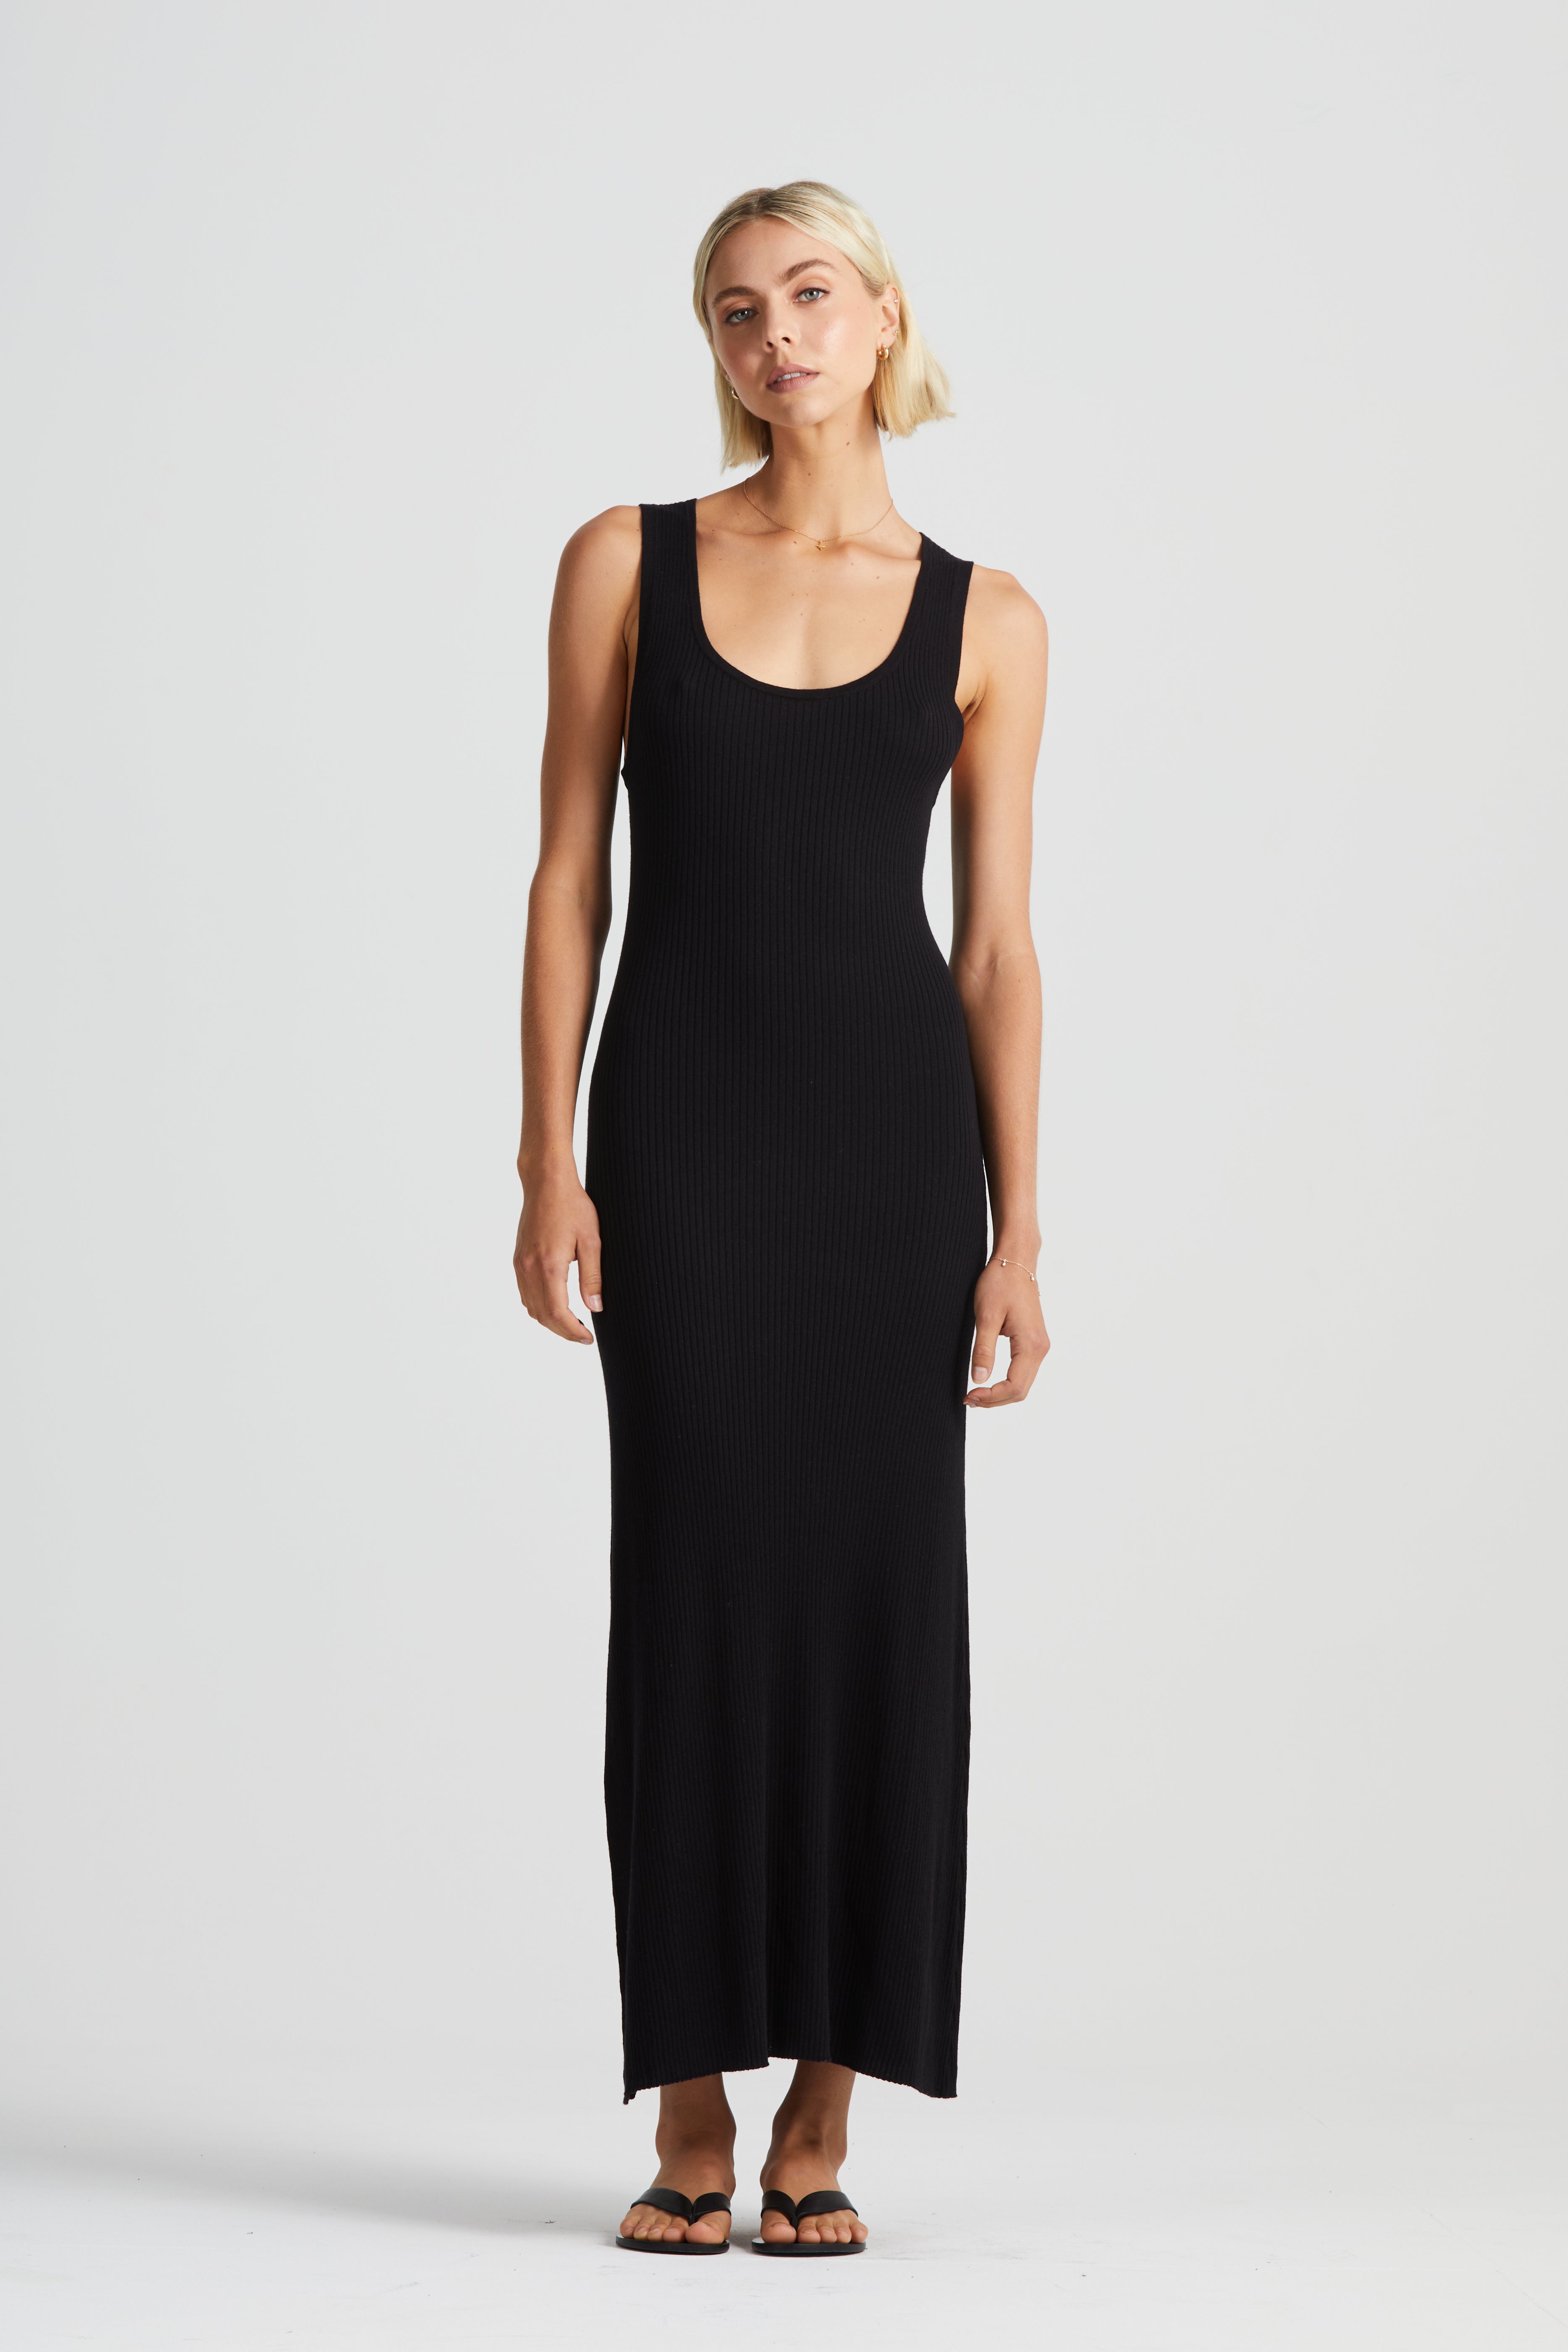 The Linear Sleeveless Knit Dress | 2 Colour-ways $390